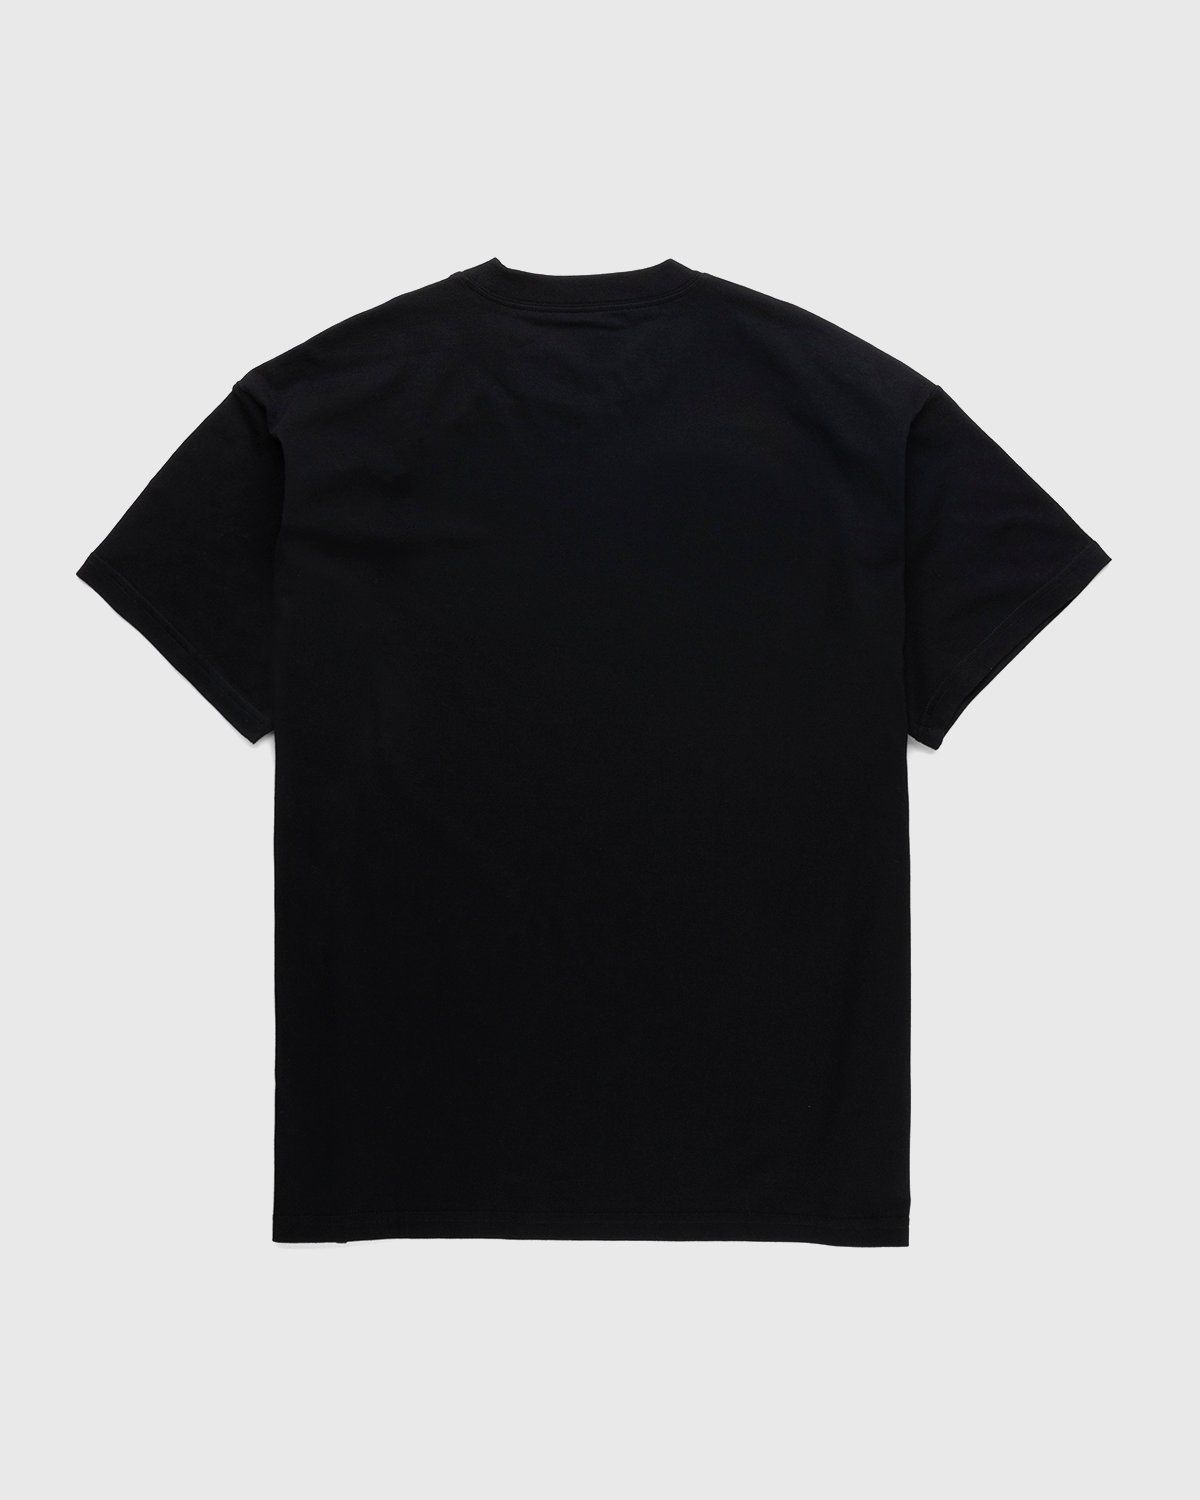 Carhartt WIP – Meatloaf T-Shirt Black - Tops - Black - Image 2